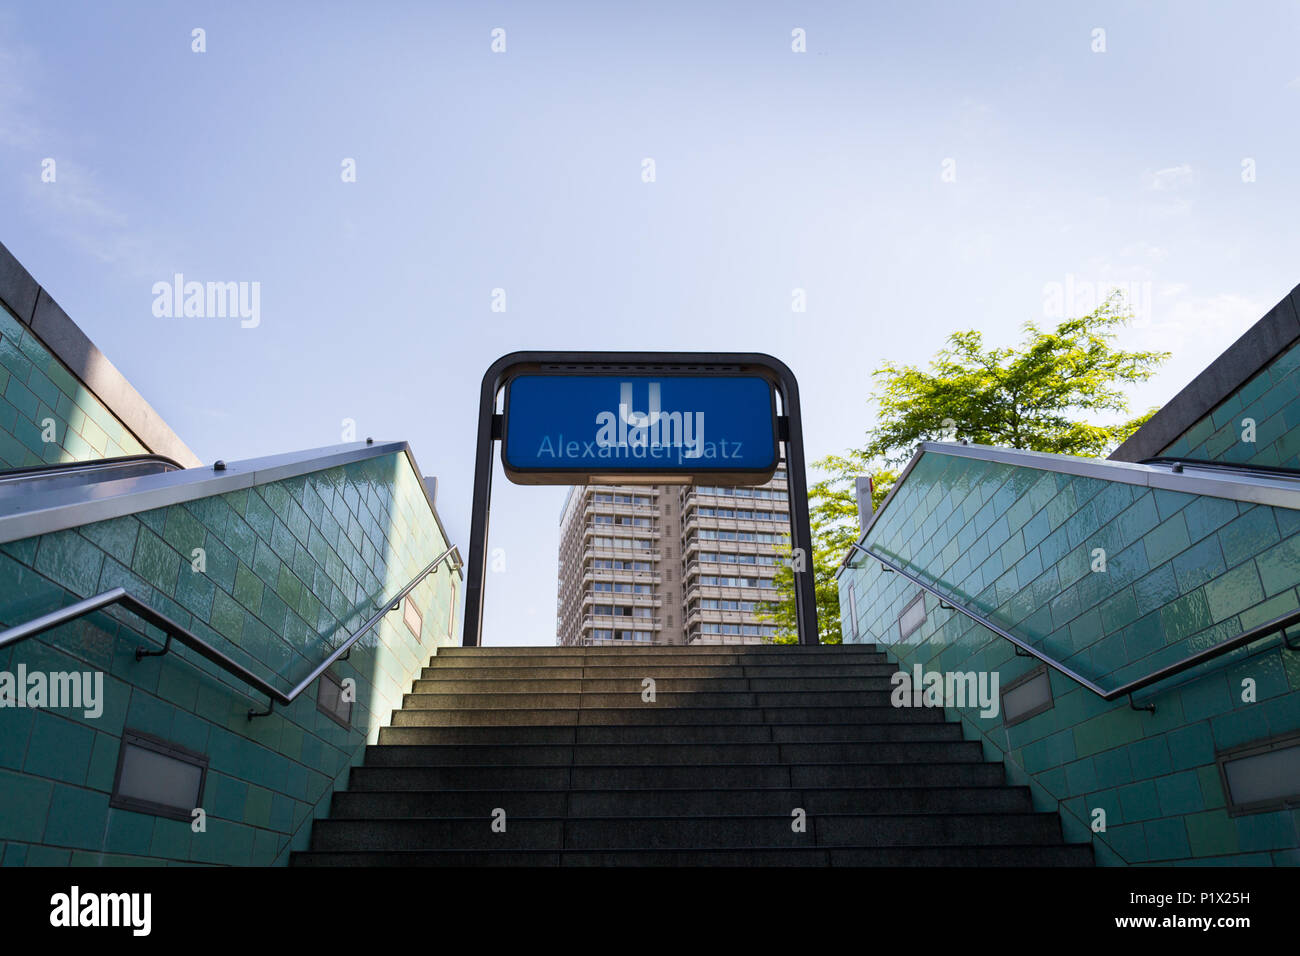 BERLIN, GERMANY - MAY 15 2018: U-Bahn Alexanderplatz rapid transit subway station on May 15, 2018 in Berlin, Germany. Stock Photo